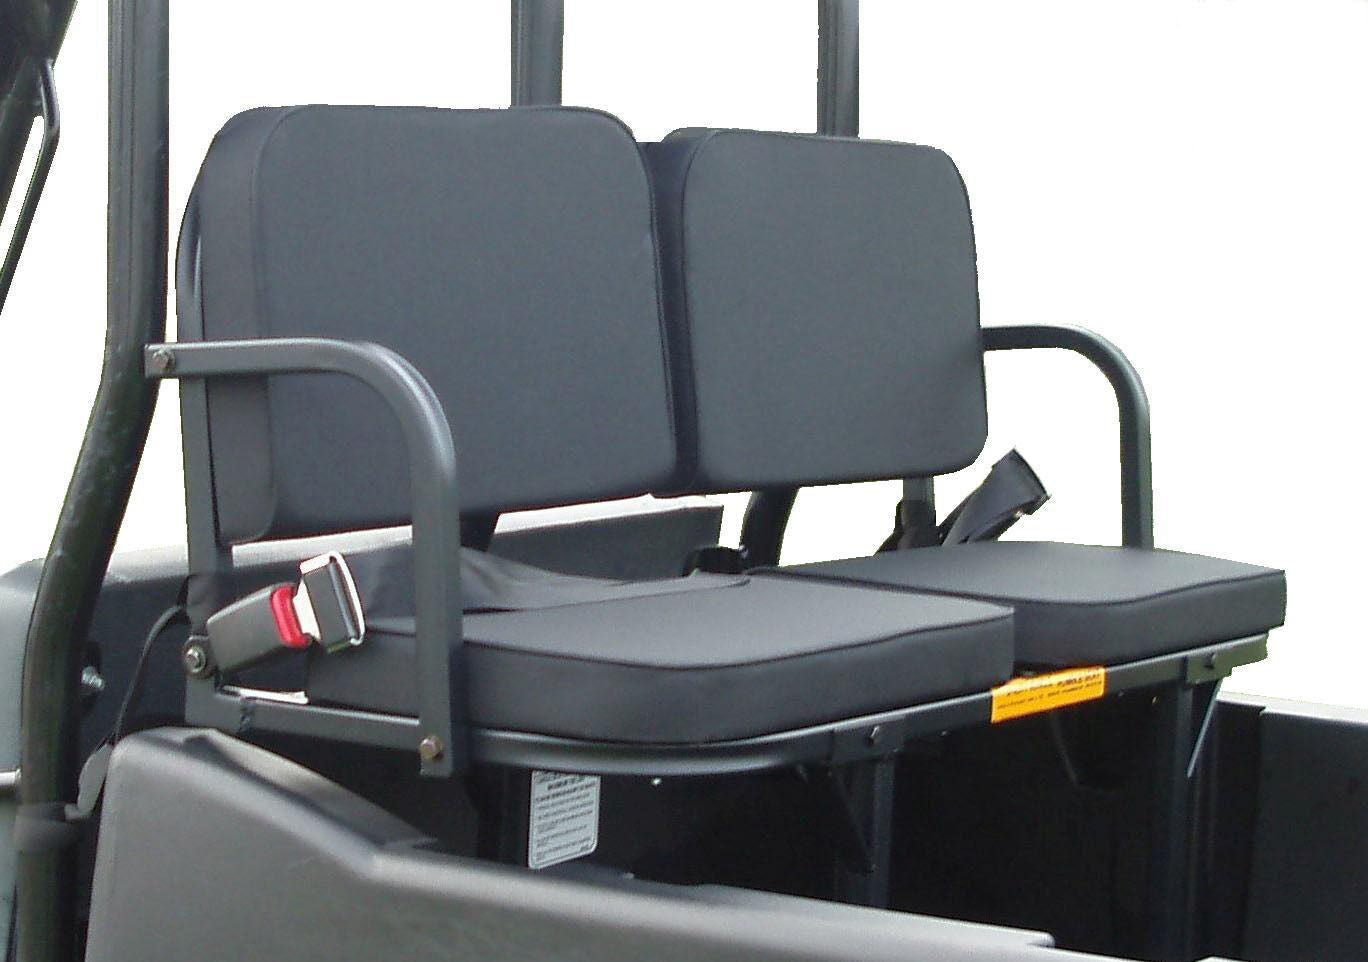 Polaris Ranger REAR ADDON SEATS - 300 Lbs Cap - Safety Belts - Install Bracket